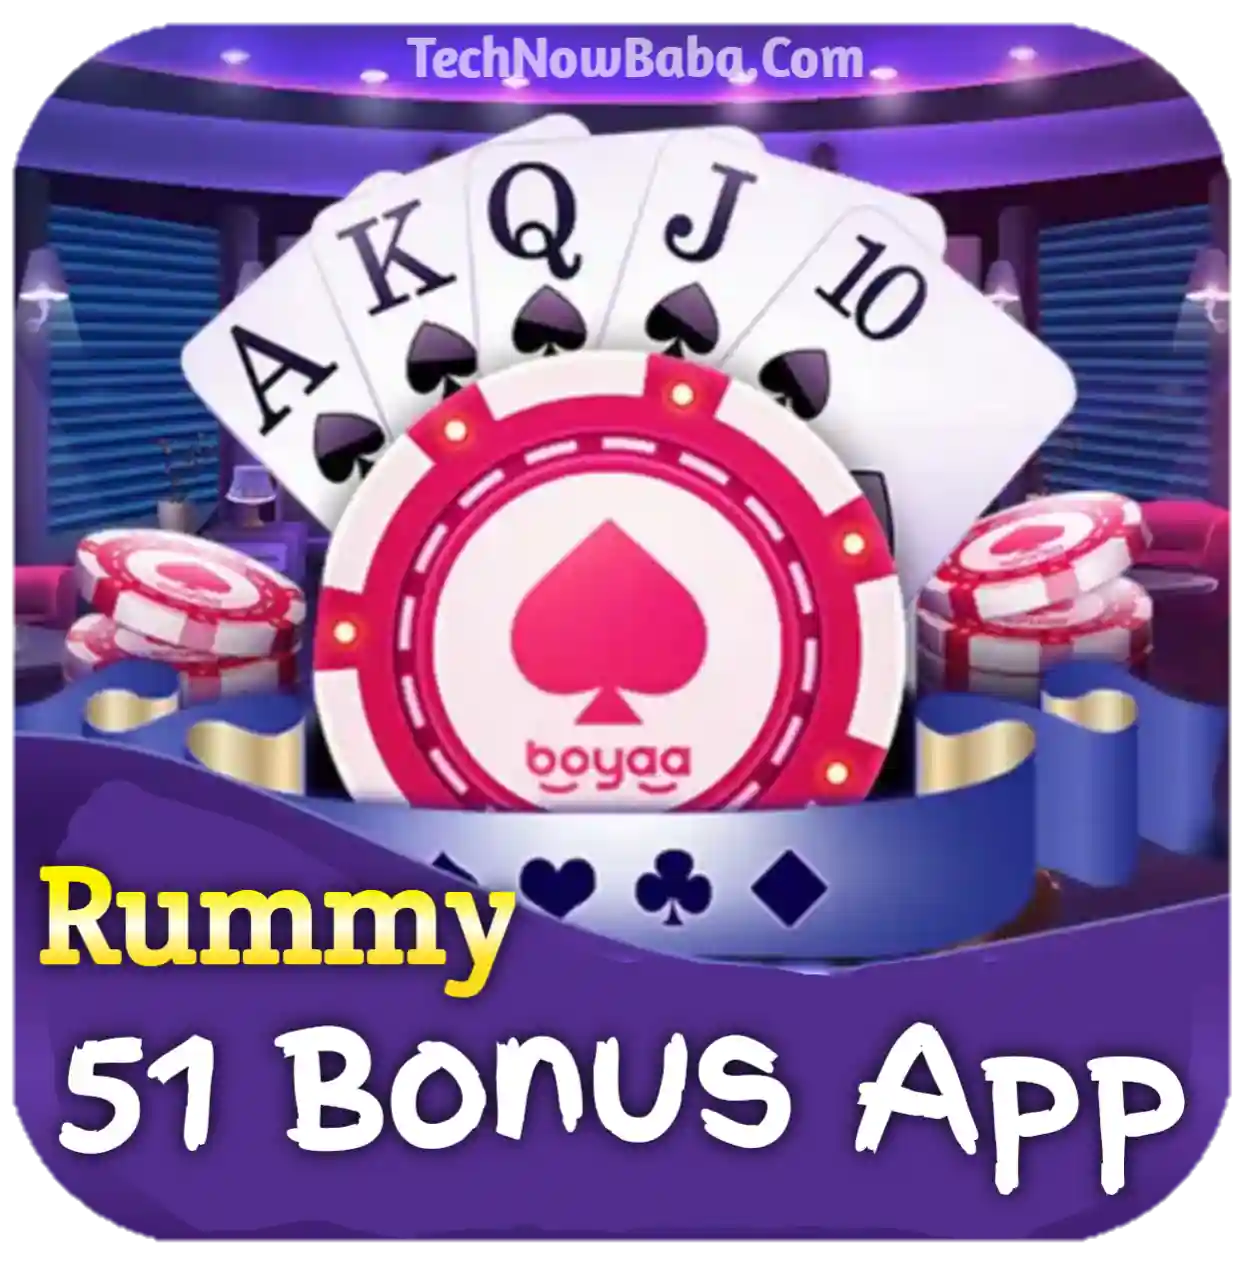 Rummy 51 Bonus Apk List - Super Rummy App List (Super Rummy App)